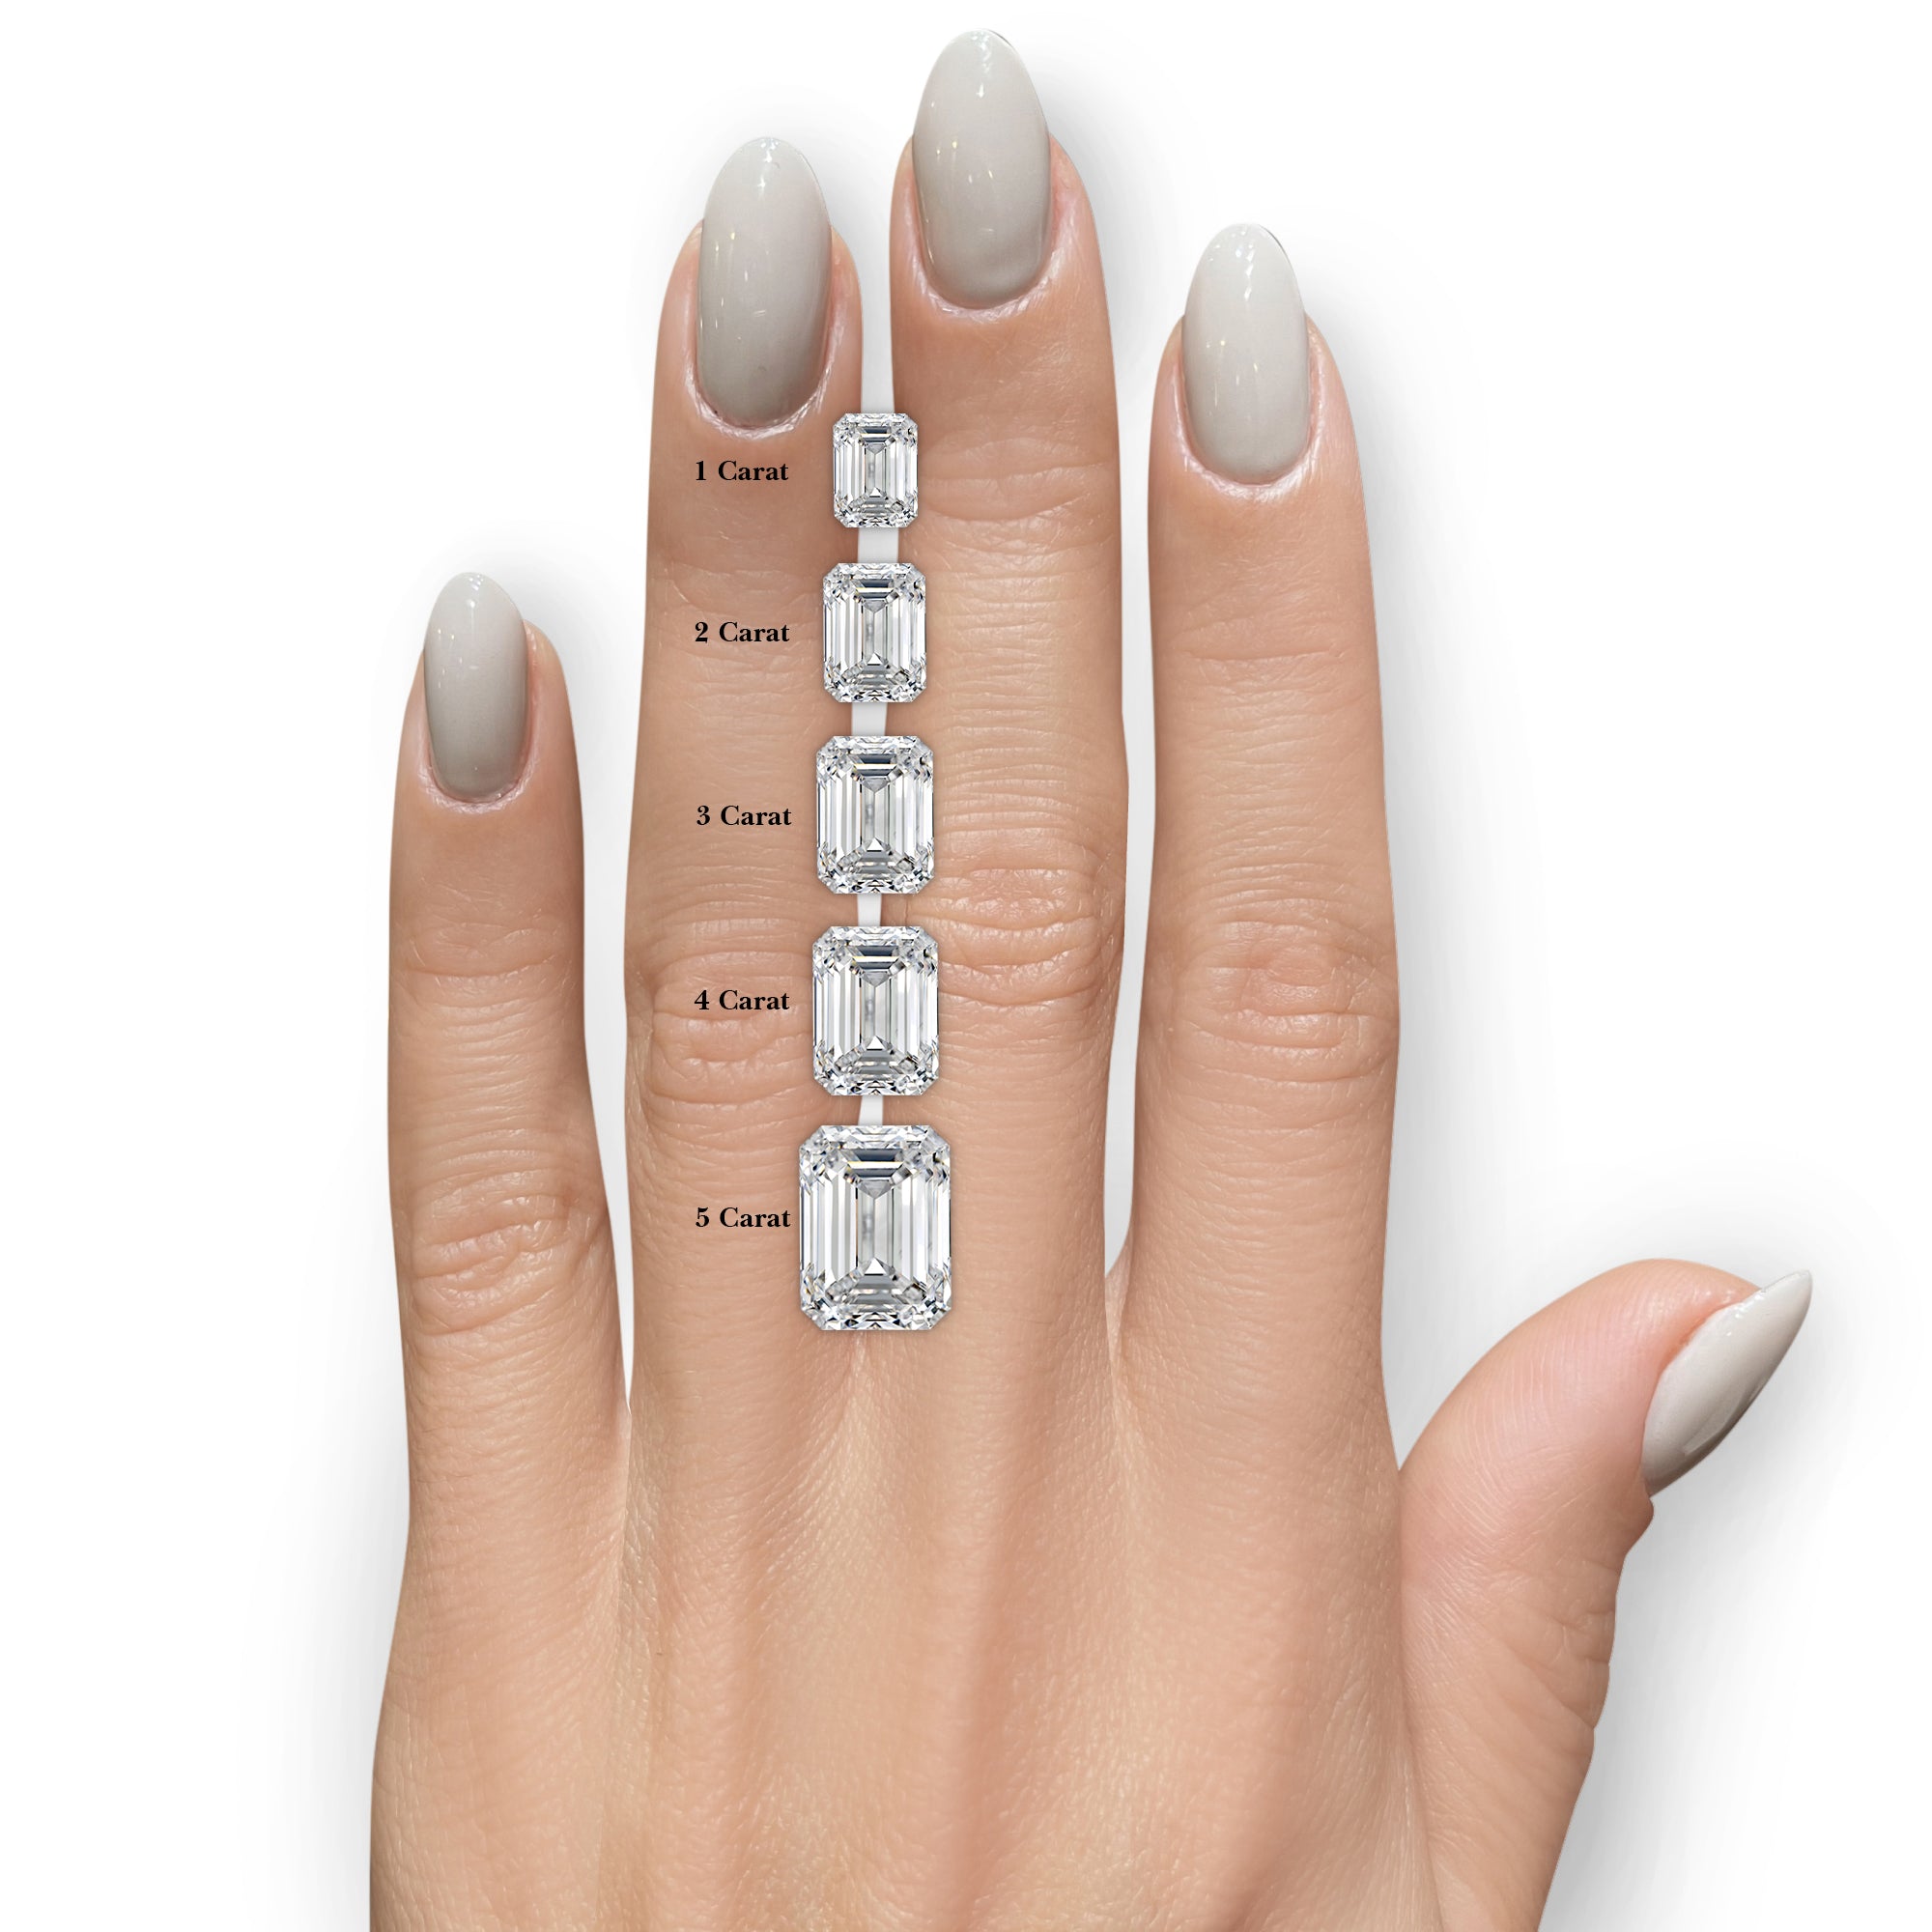 Vanessa Diamond Engagement Ring -14K White Gold